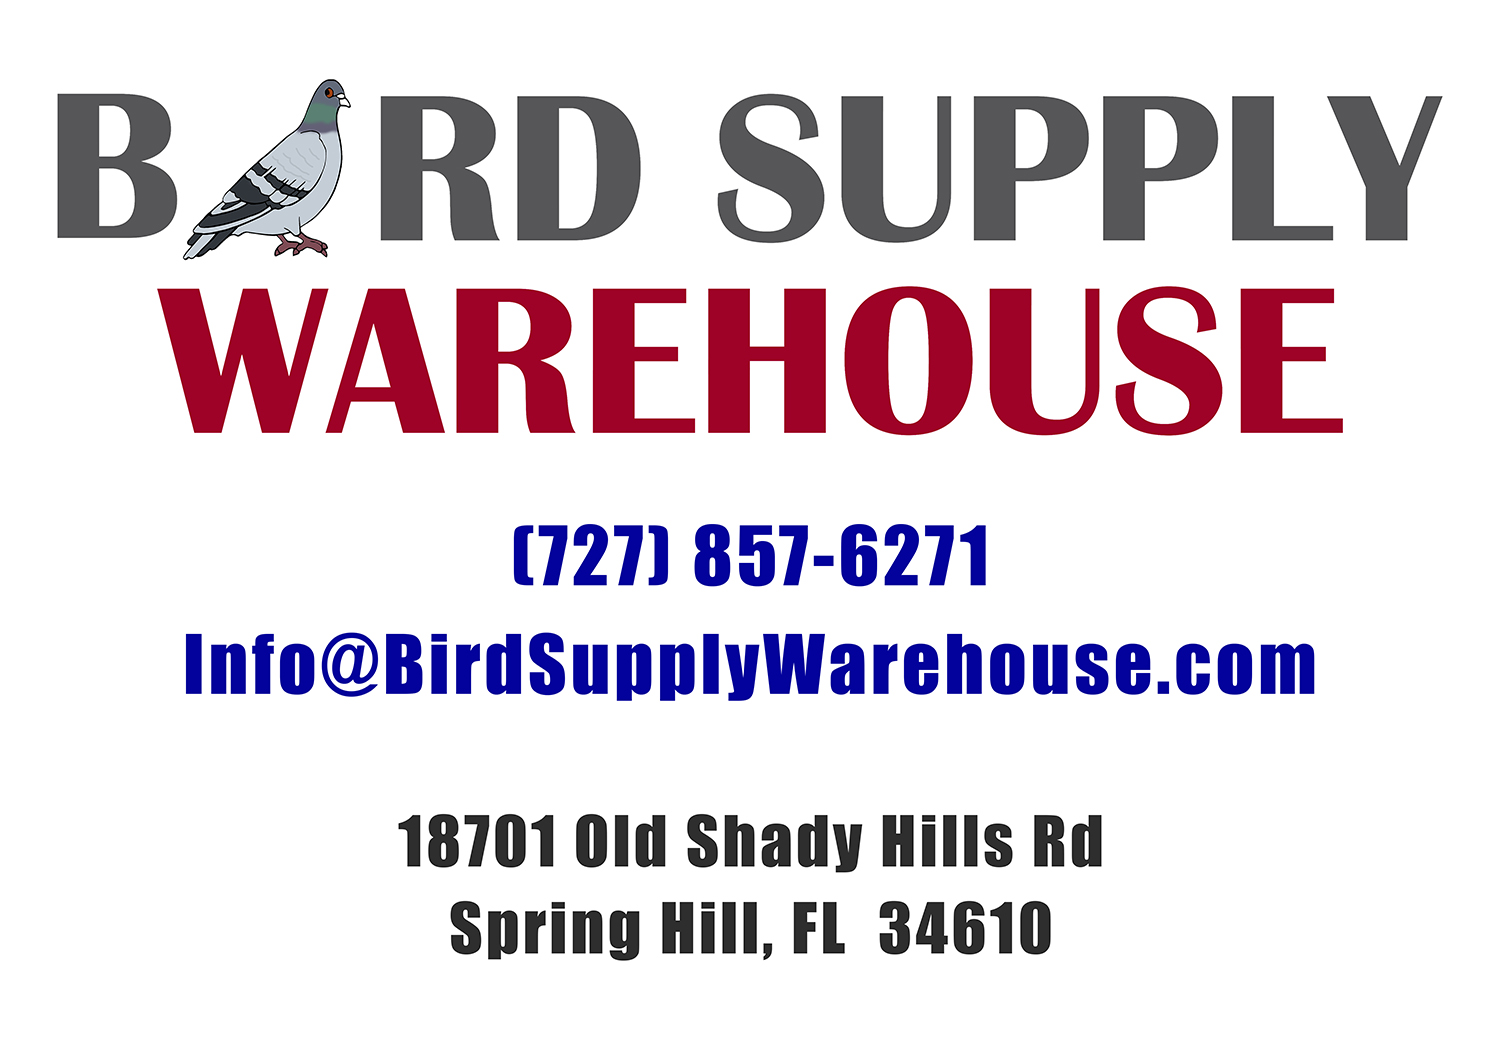 Bird Supply Warehouse